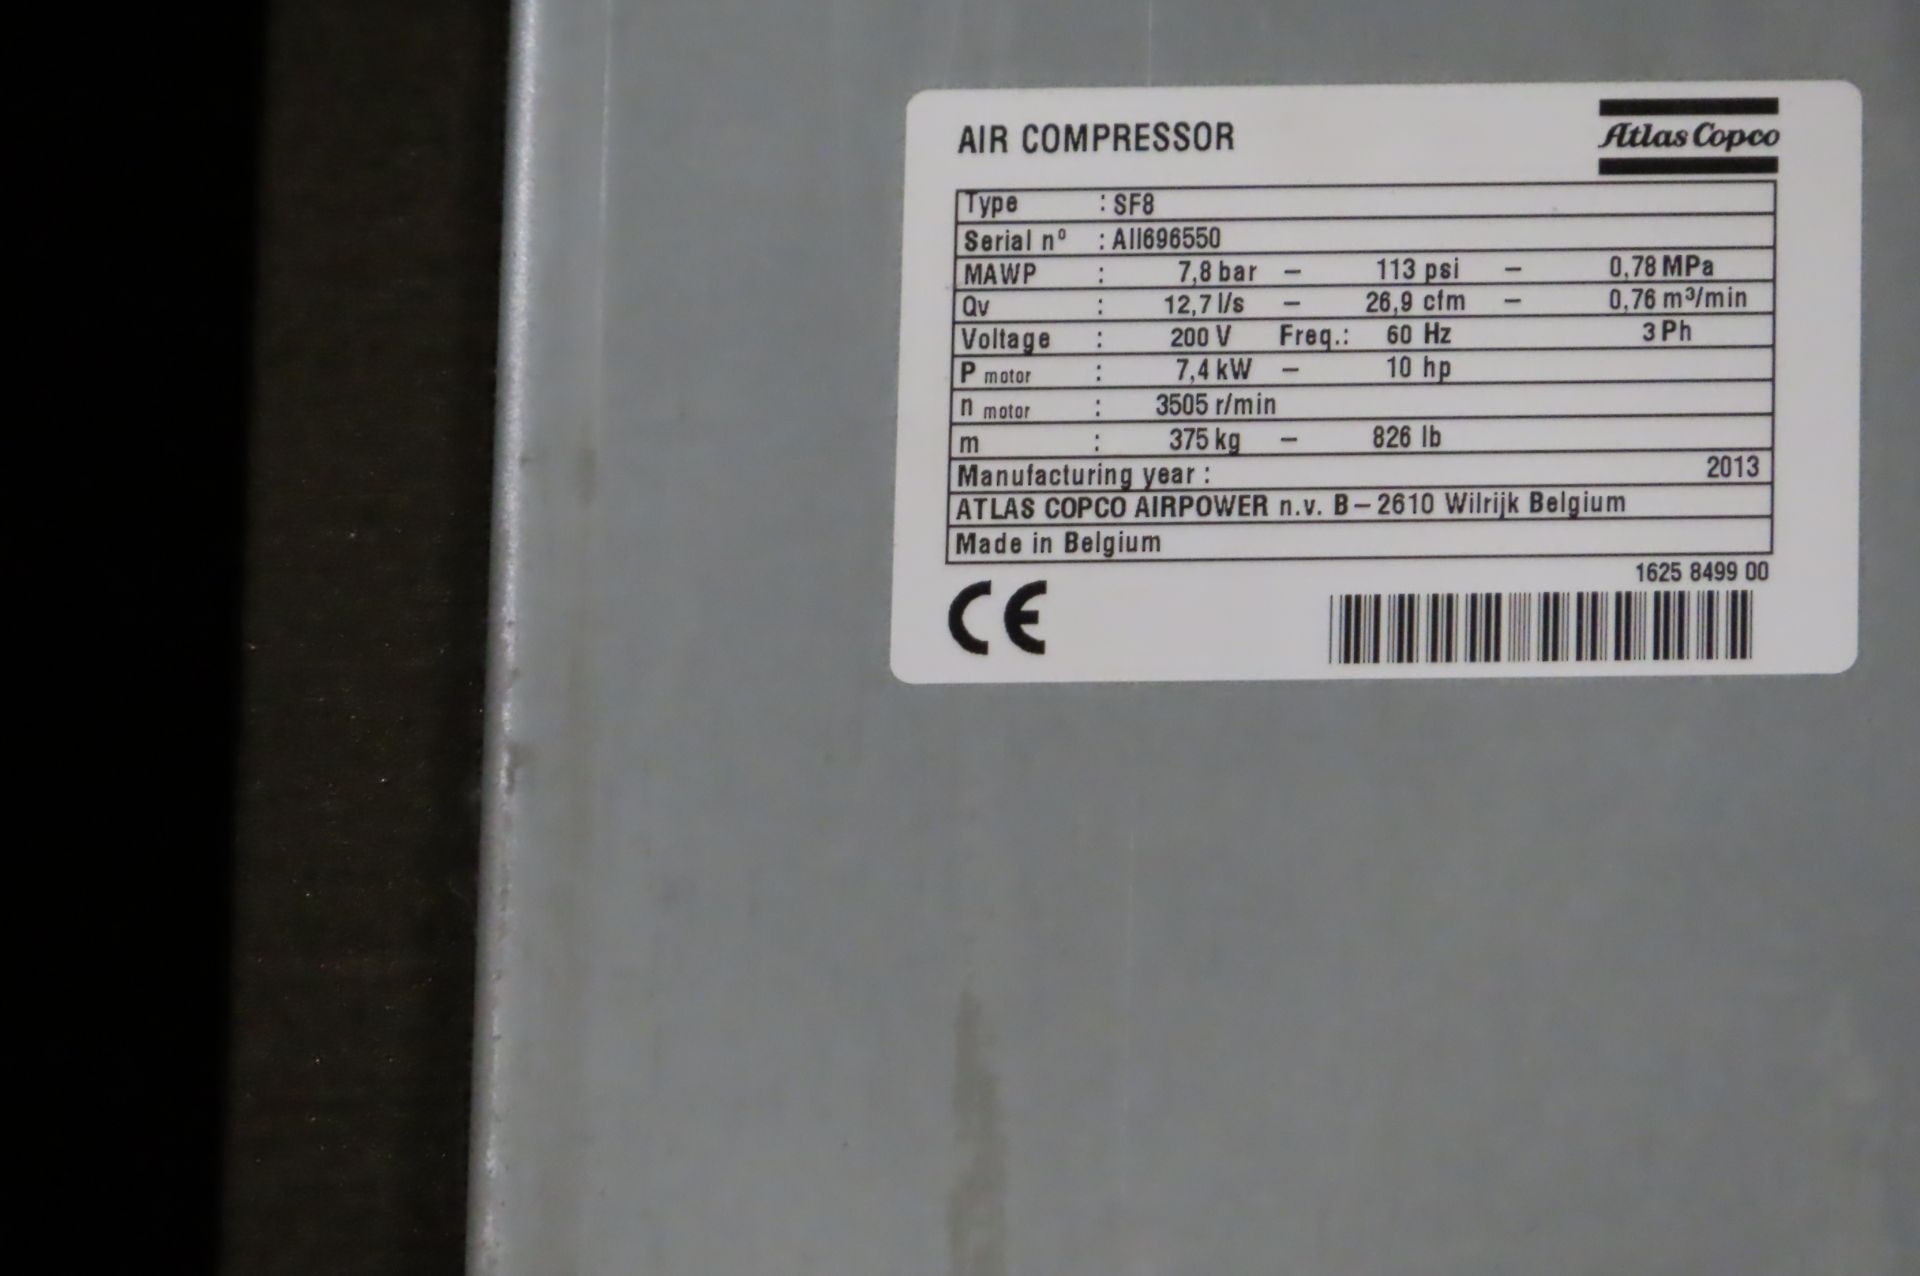 Air compressor - Image 2 of 3